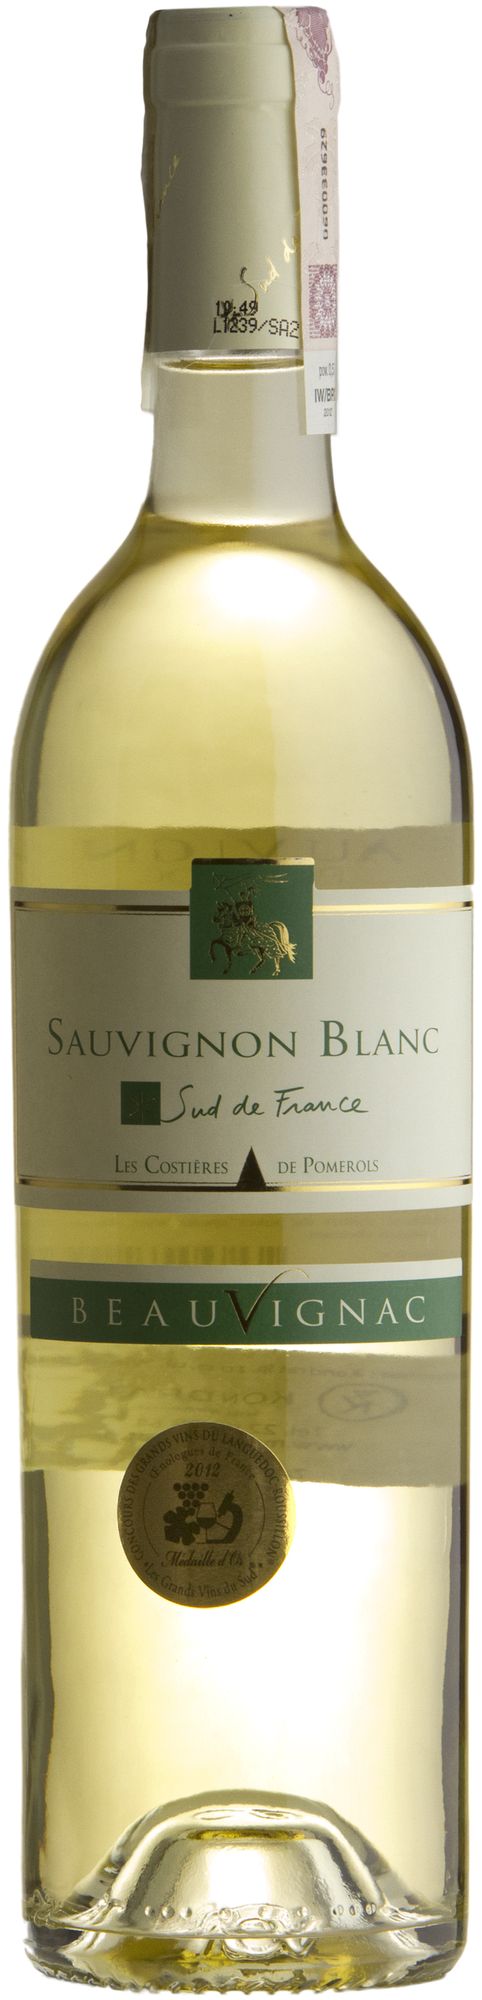 Wino Costieres Pomerols Beauvignac Sauvignon Blanc Pays d'Oc IGP